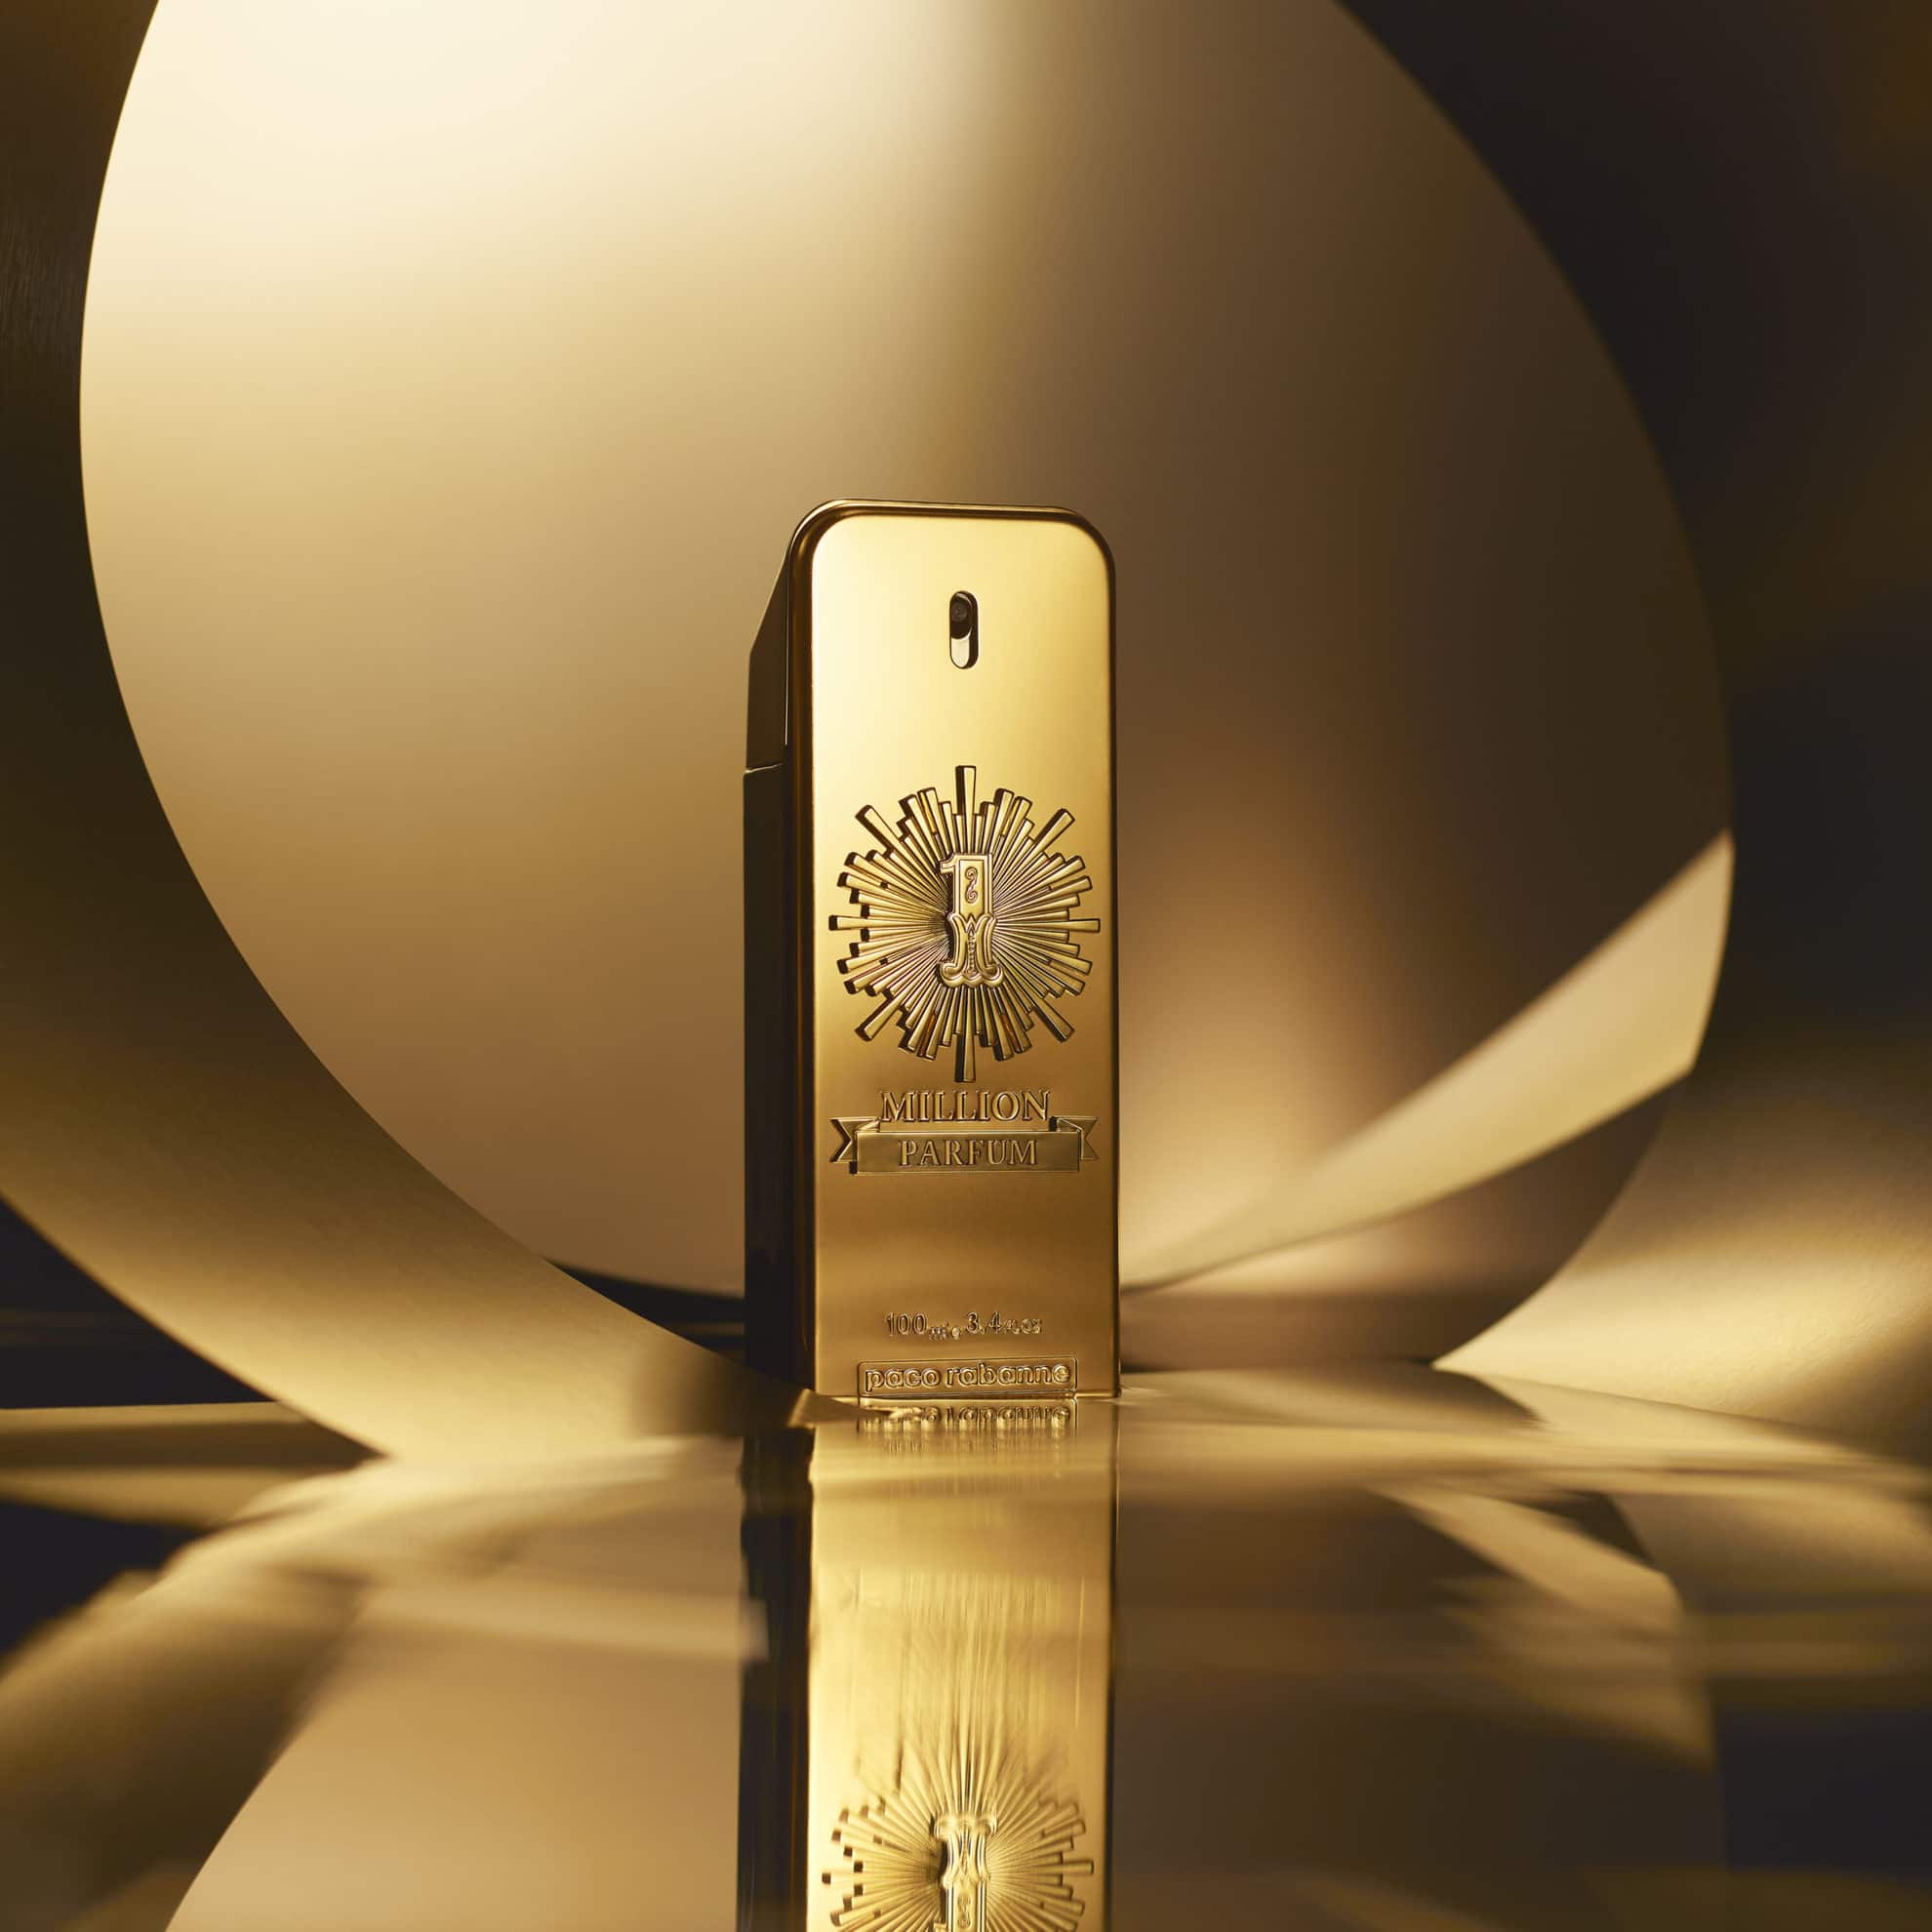 1 Million Parfum » Paco Rabanne » The Parfumerie » Sri Lanka